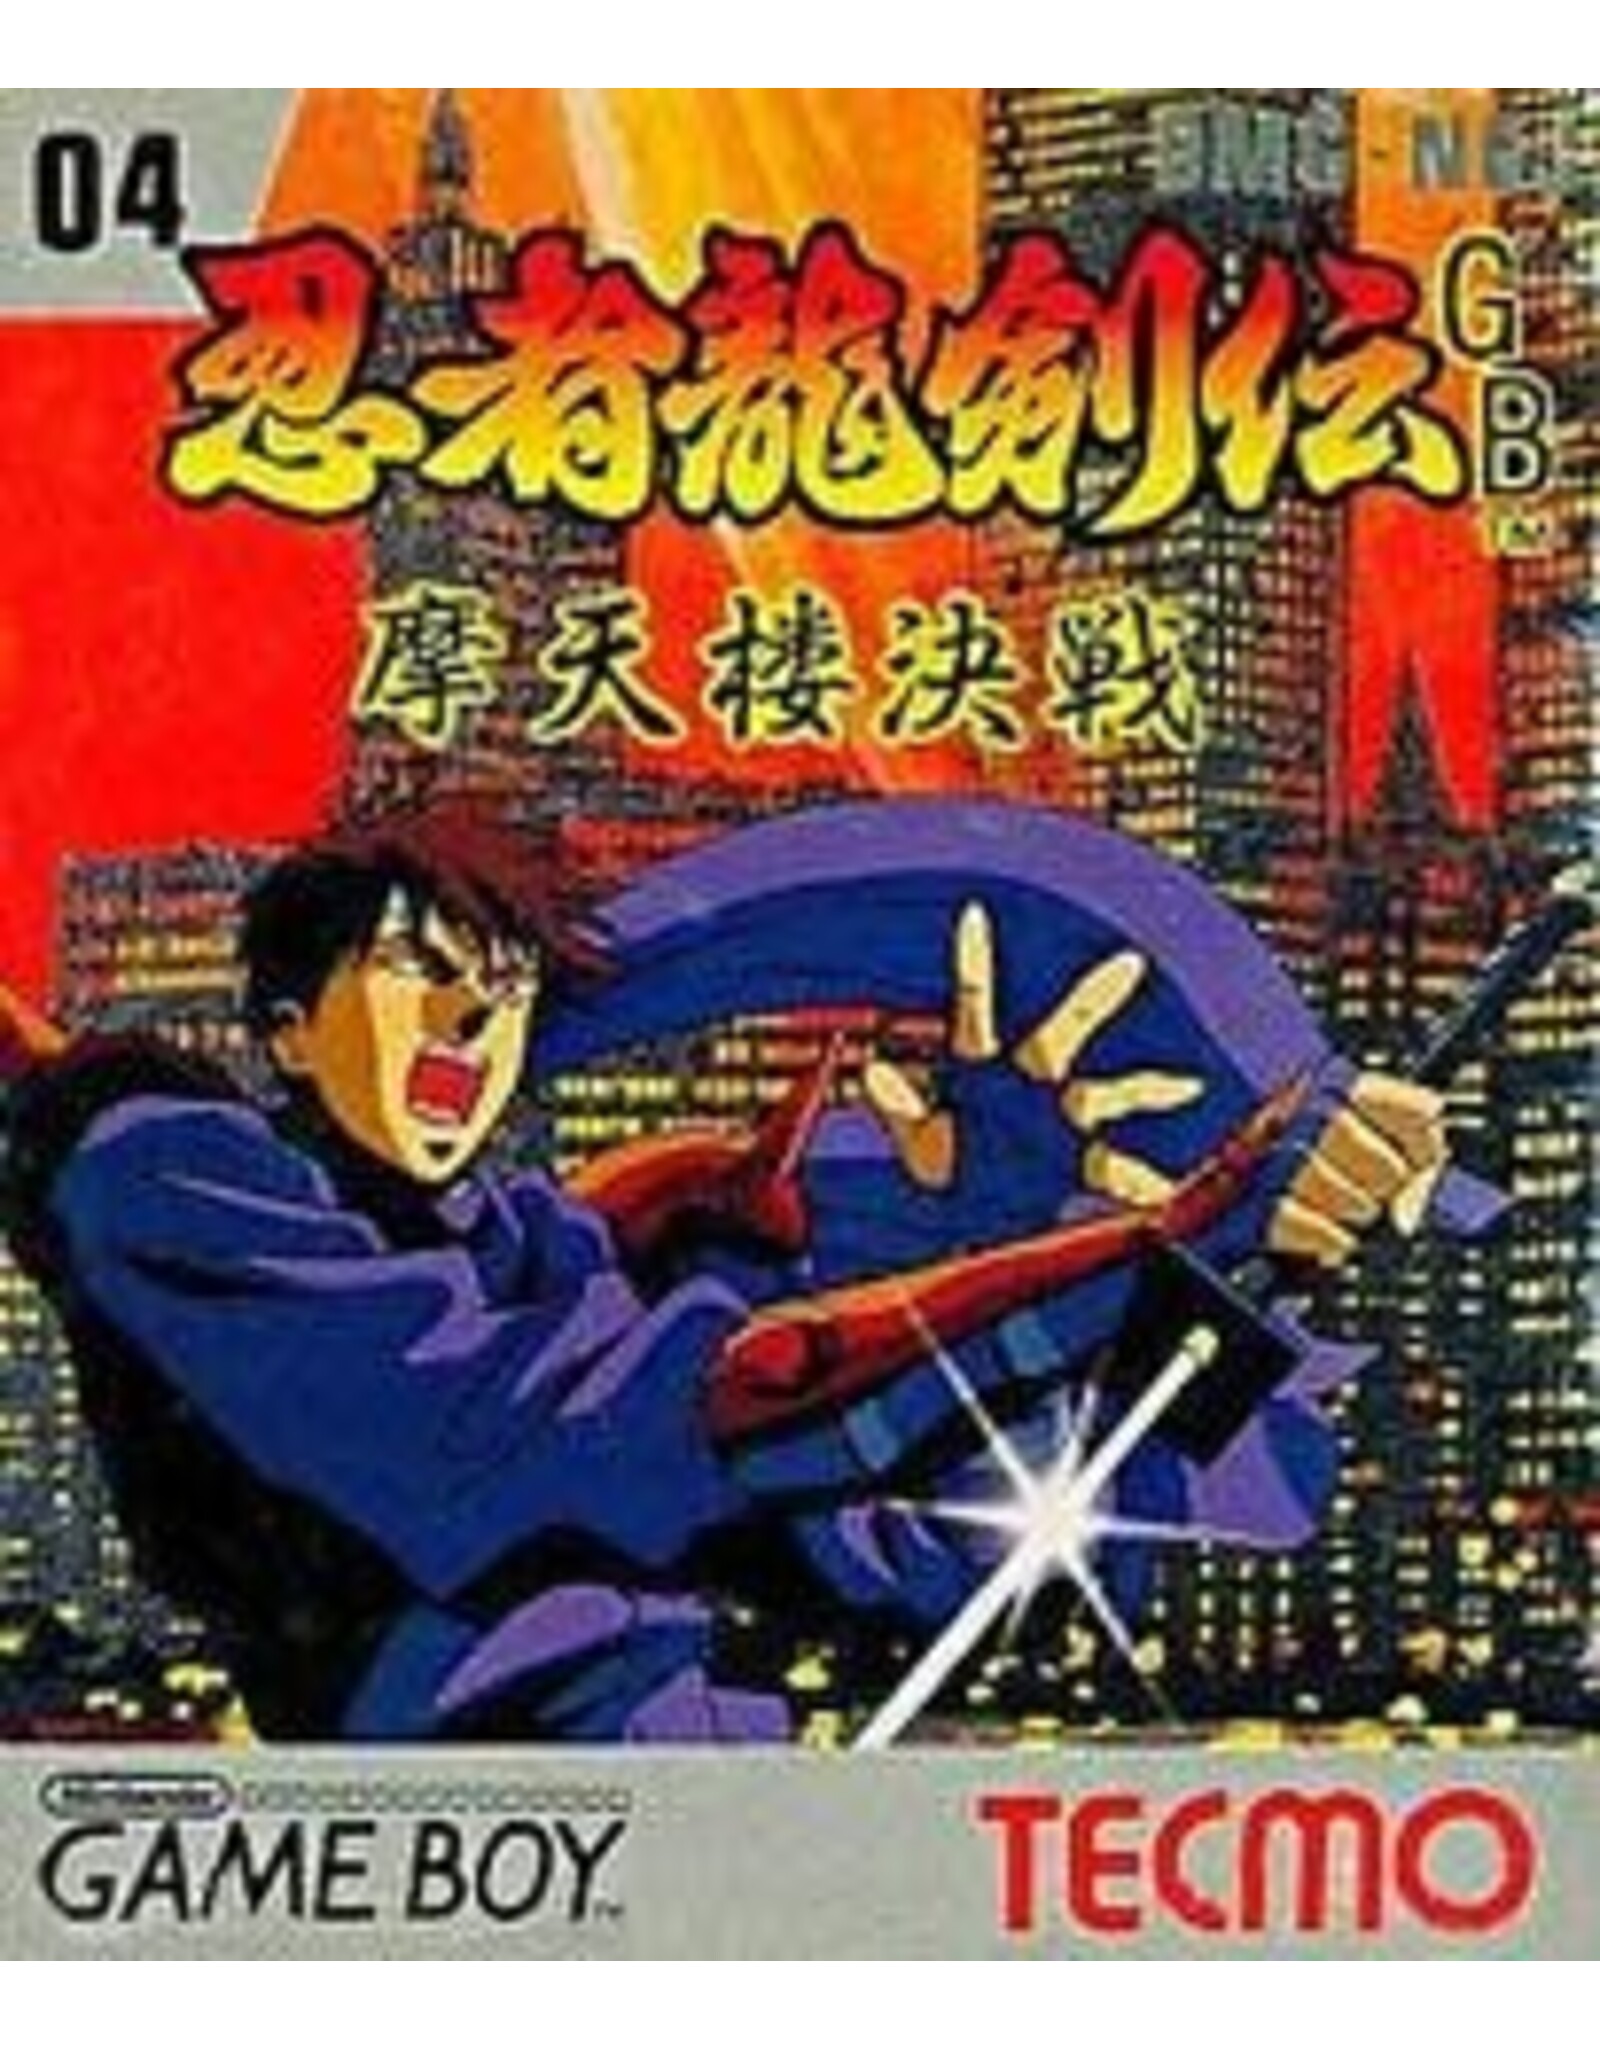 Game Boy Ninja Ryukenden GB: Matenrou Kessen (Cart Only, JP Import)